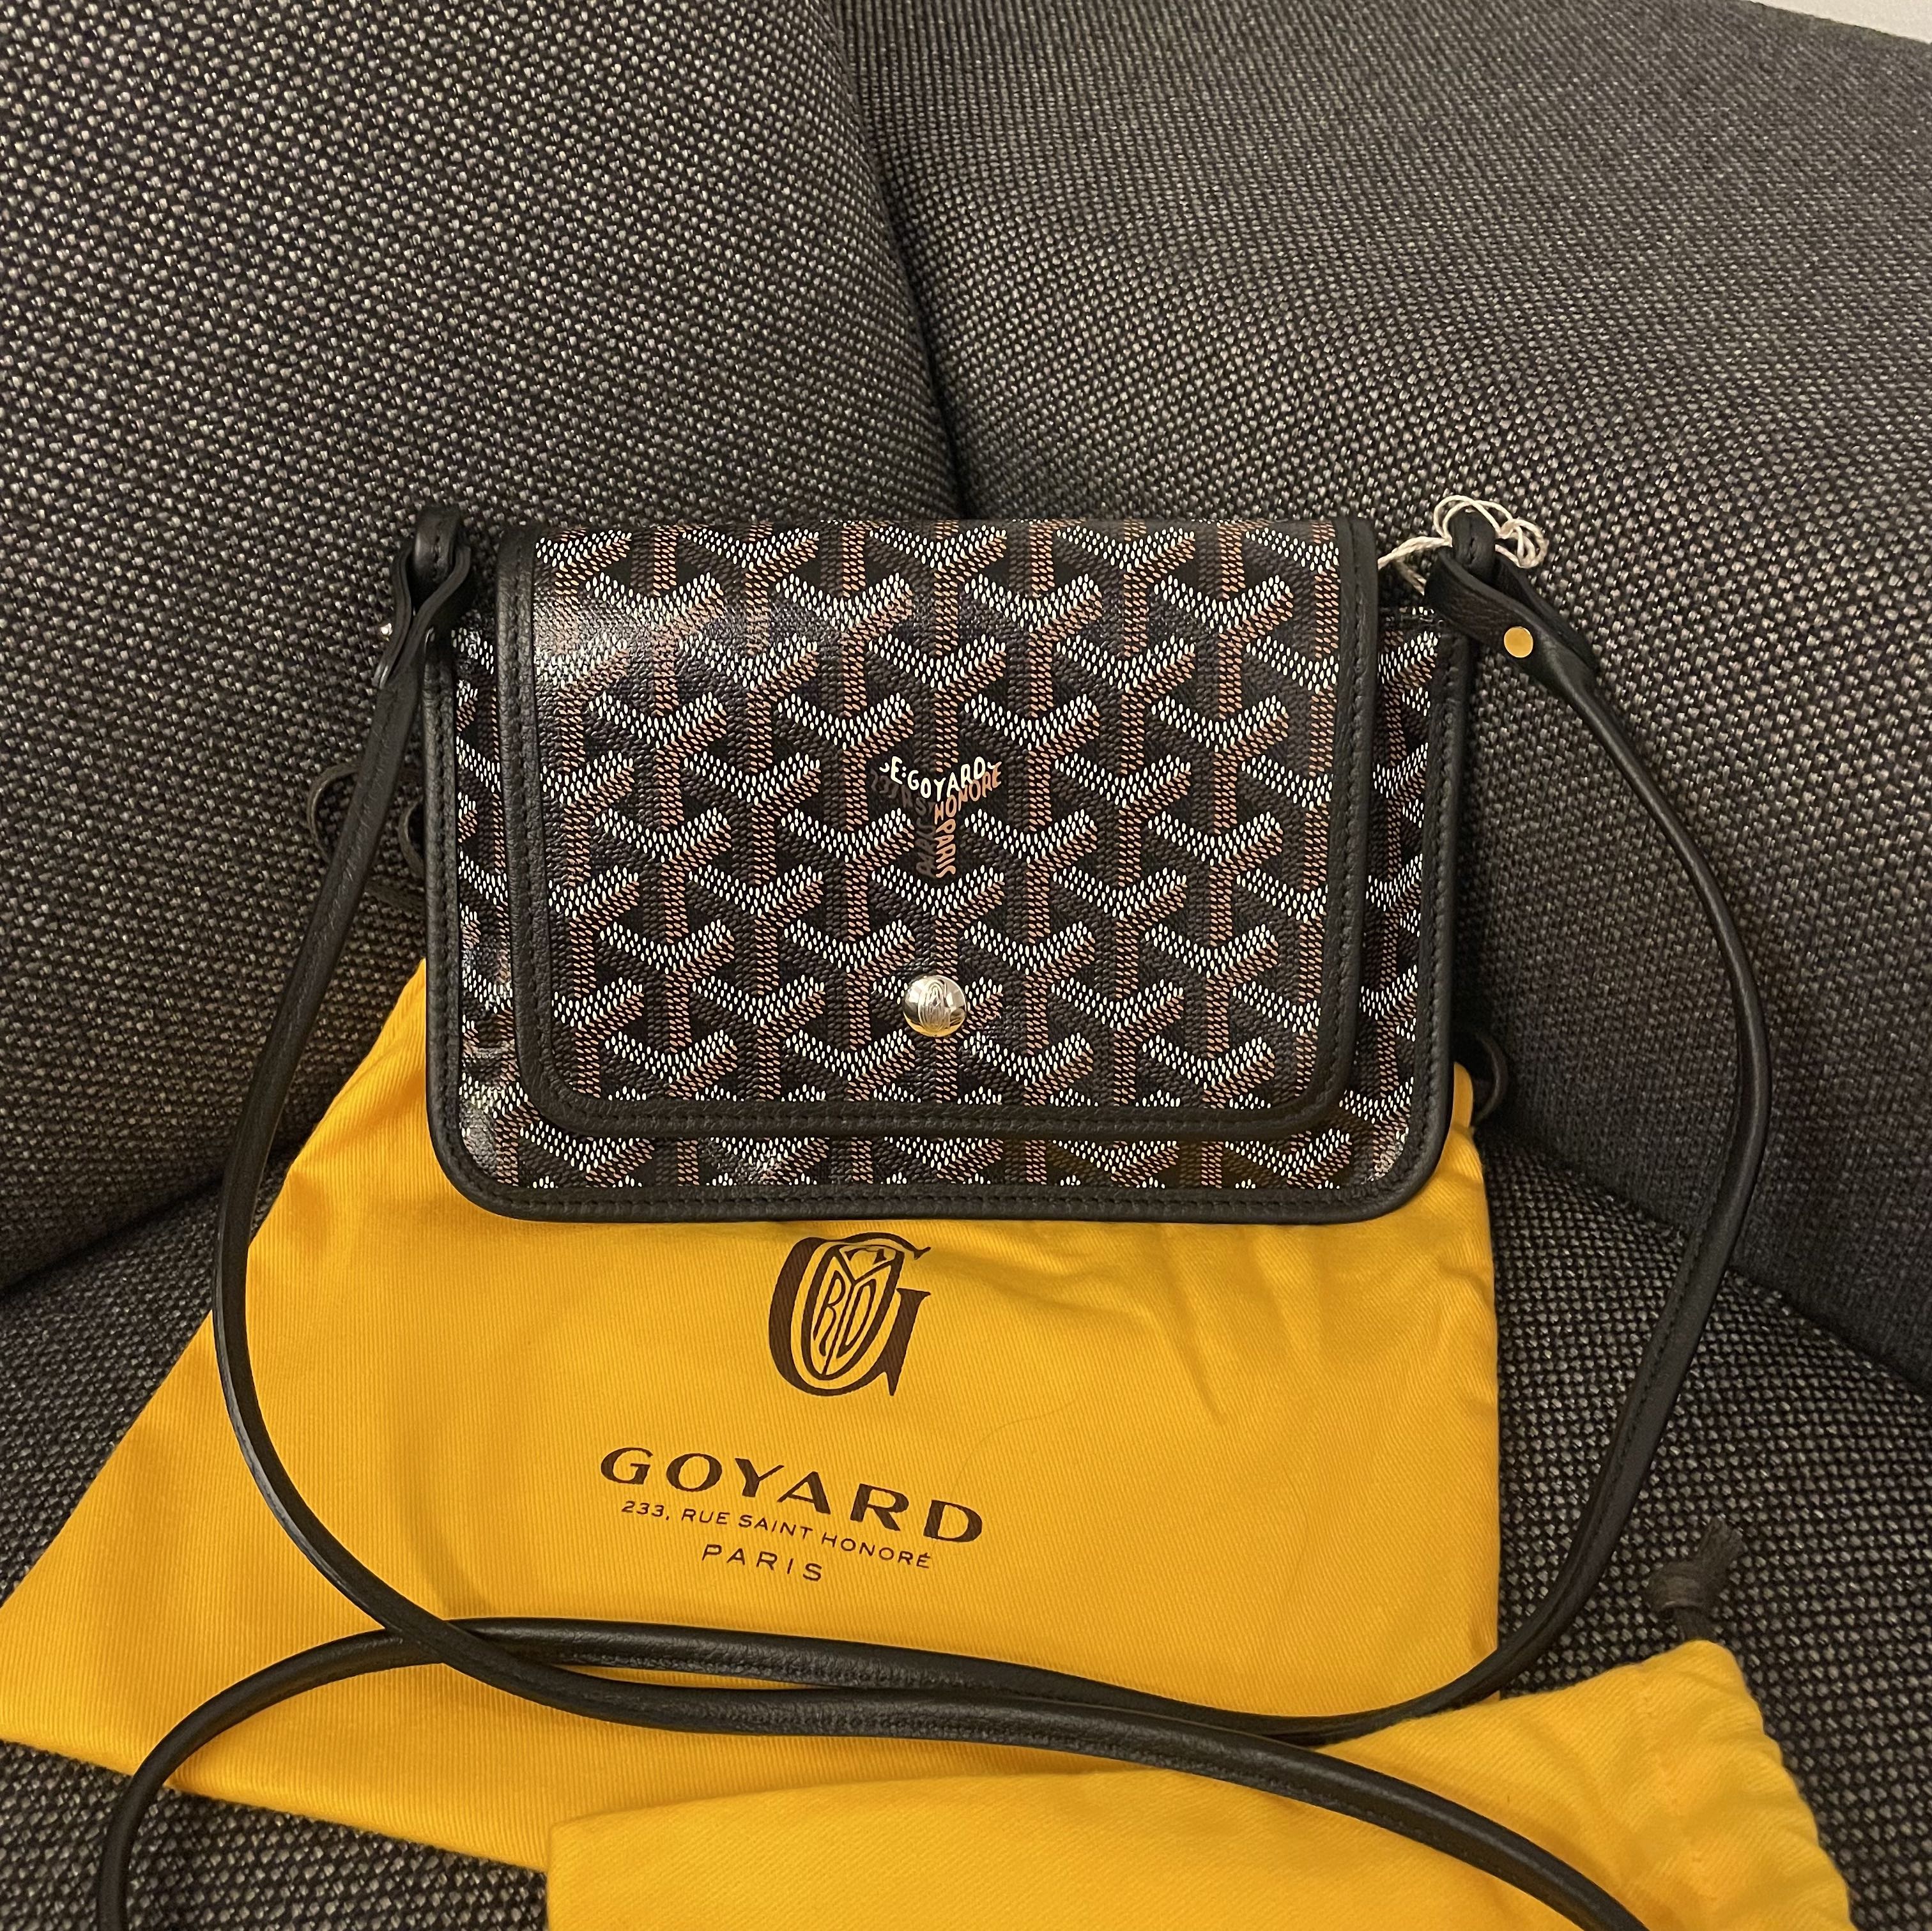 Goyard Plumet Pocket Wallet Bag Review 